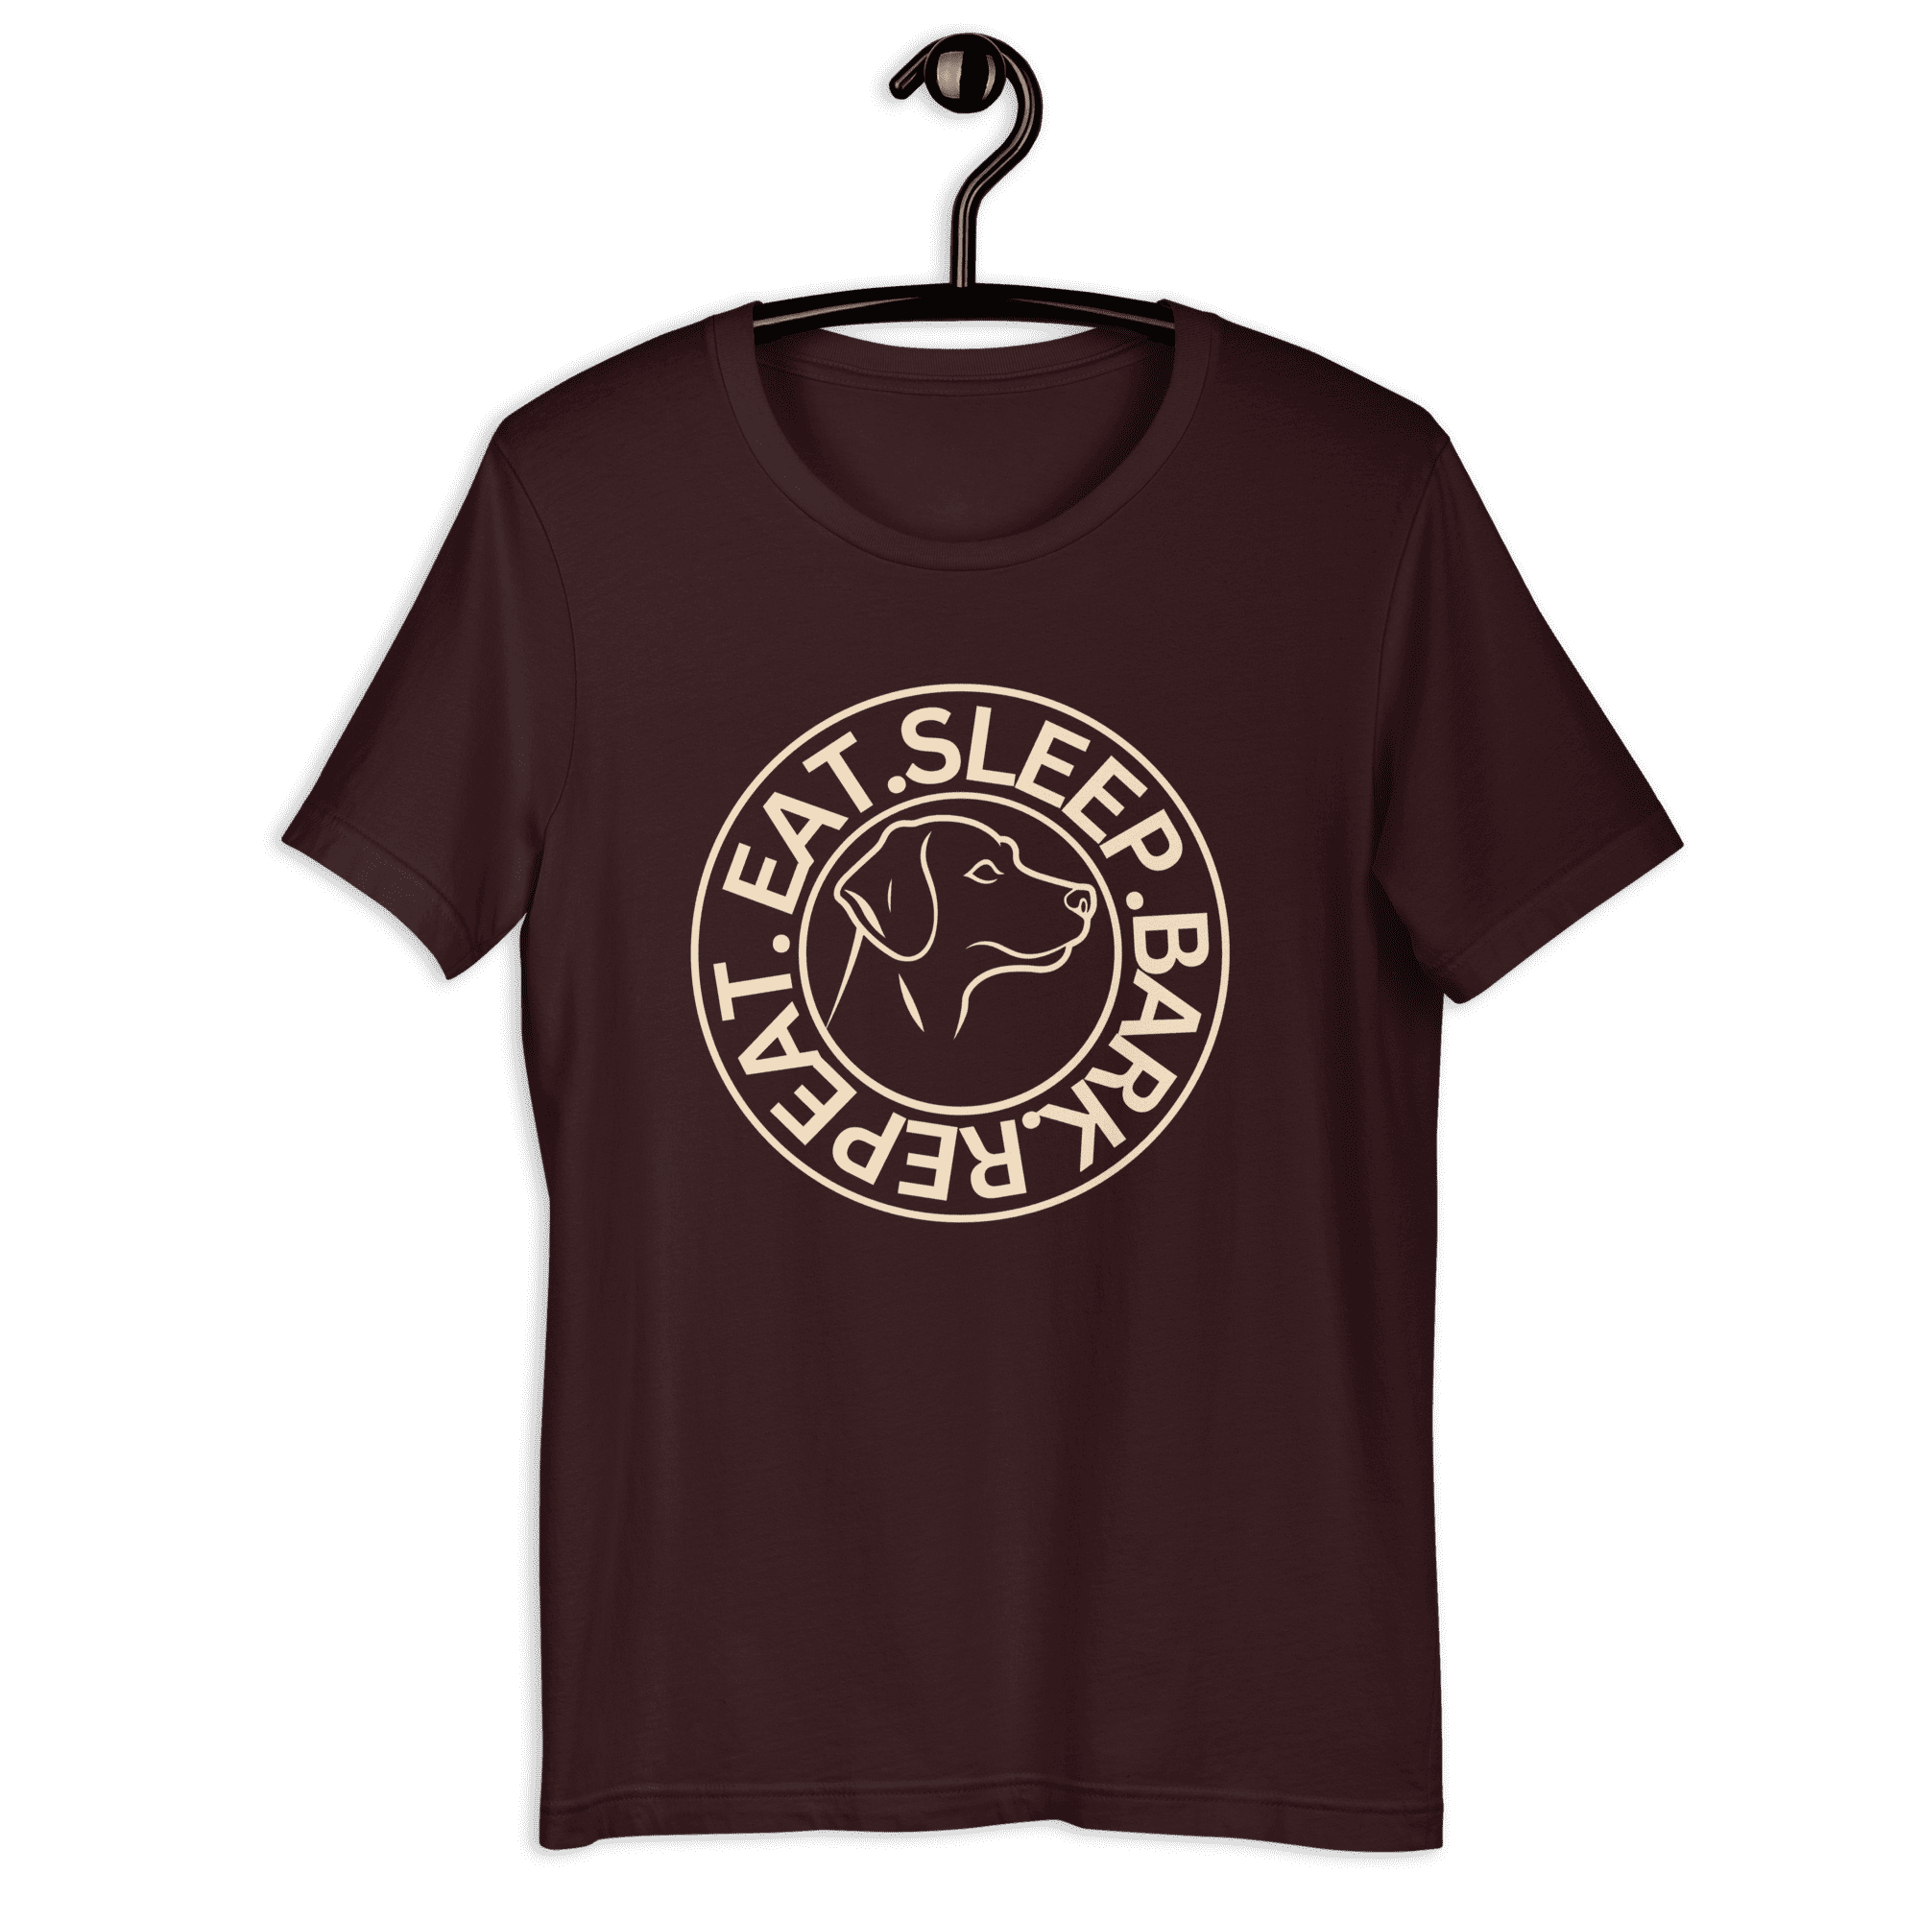 Eat Sleep Bark Repeat Labrador Retriever Unisex T-Shirt. Dark Maroon